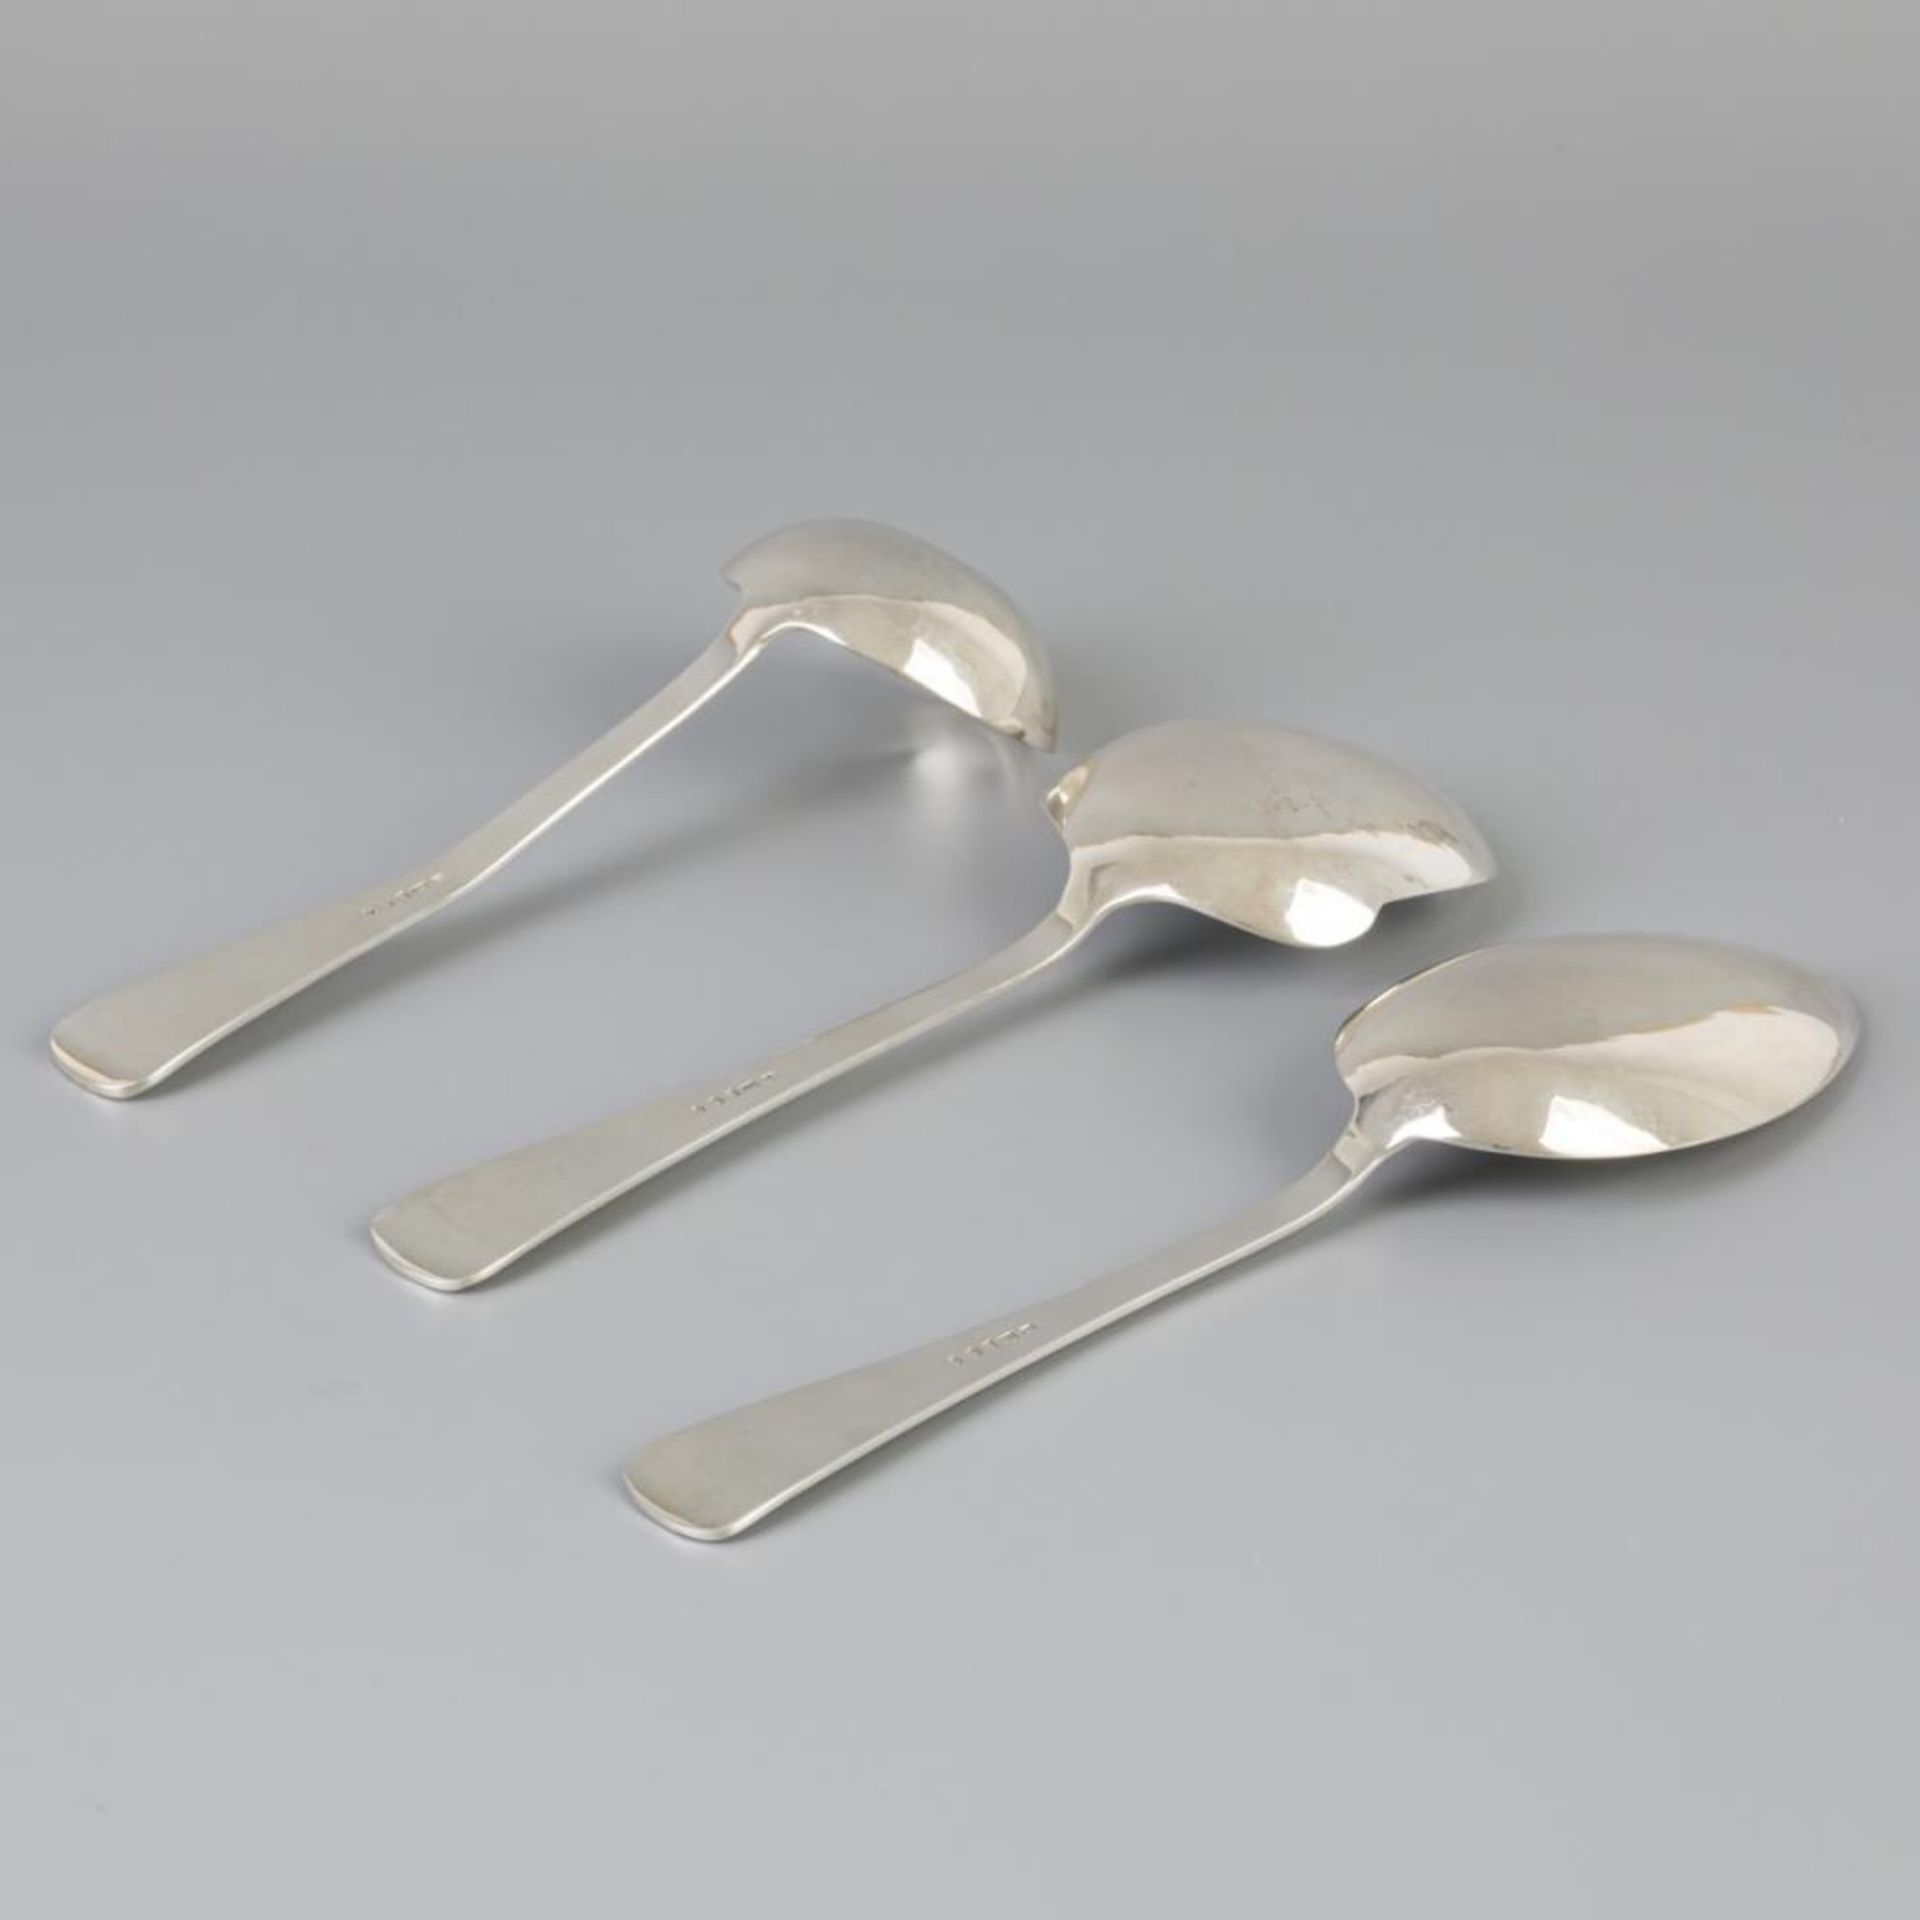 3 piece set of spoons / laddles "Haags Lofje" silver. - Bild 3 aus 5